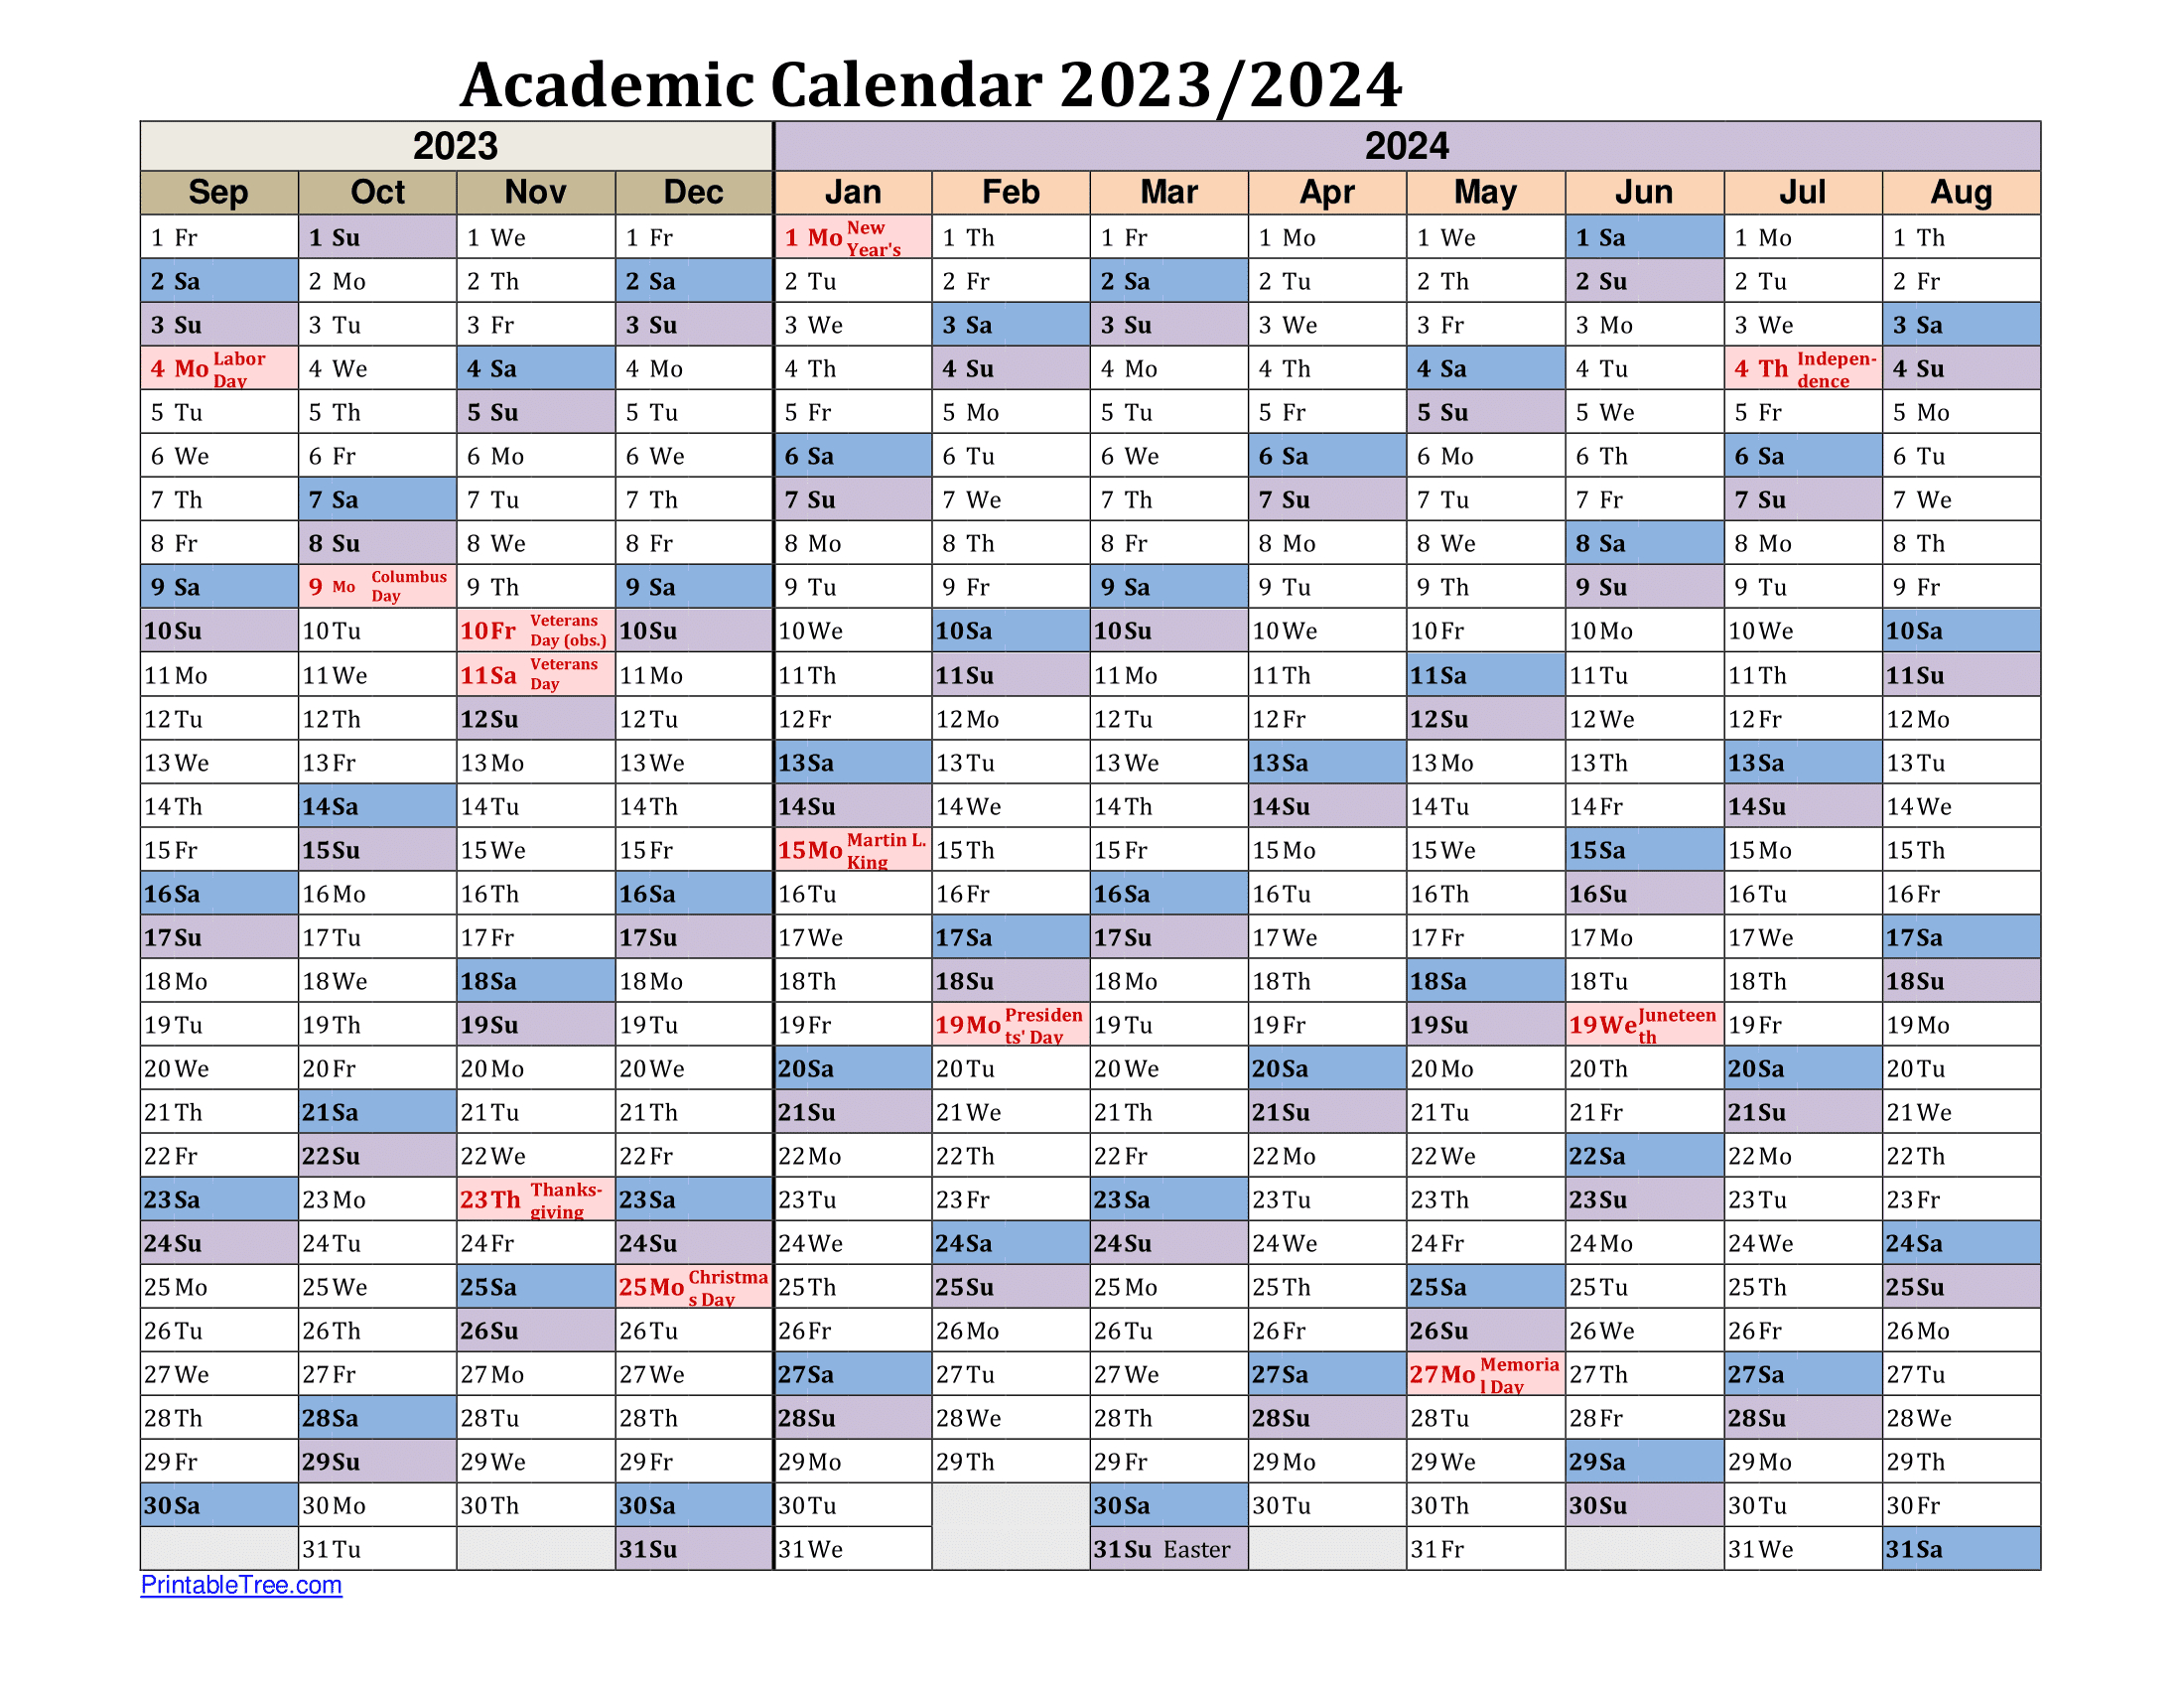 Free Printable Academic Calendar 2023 To 2024 Templates | Printable Calendar September 2023 to August 2024